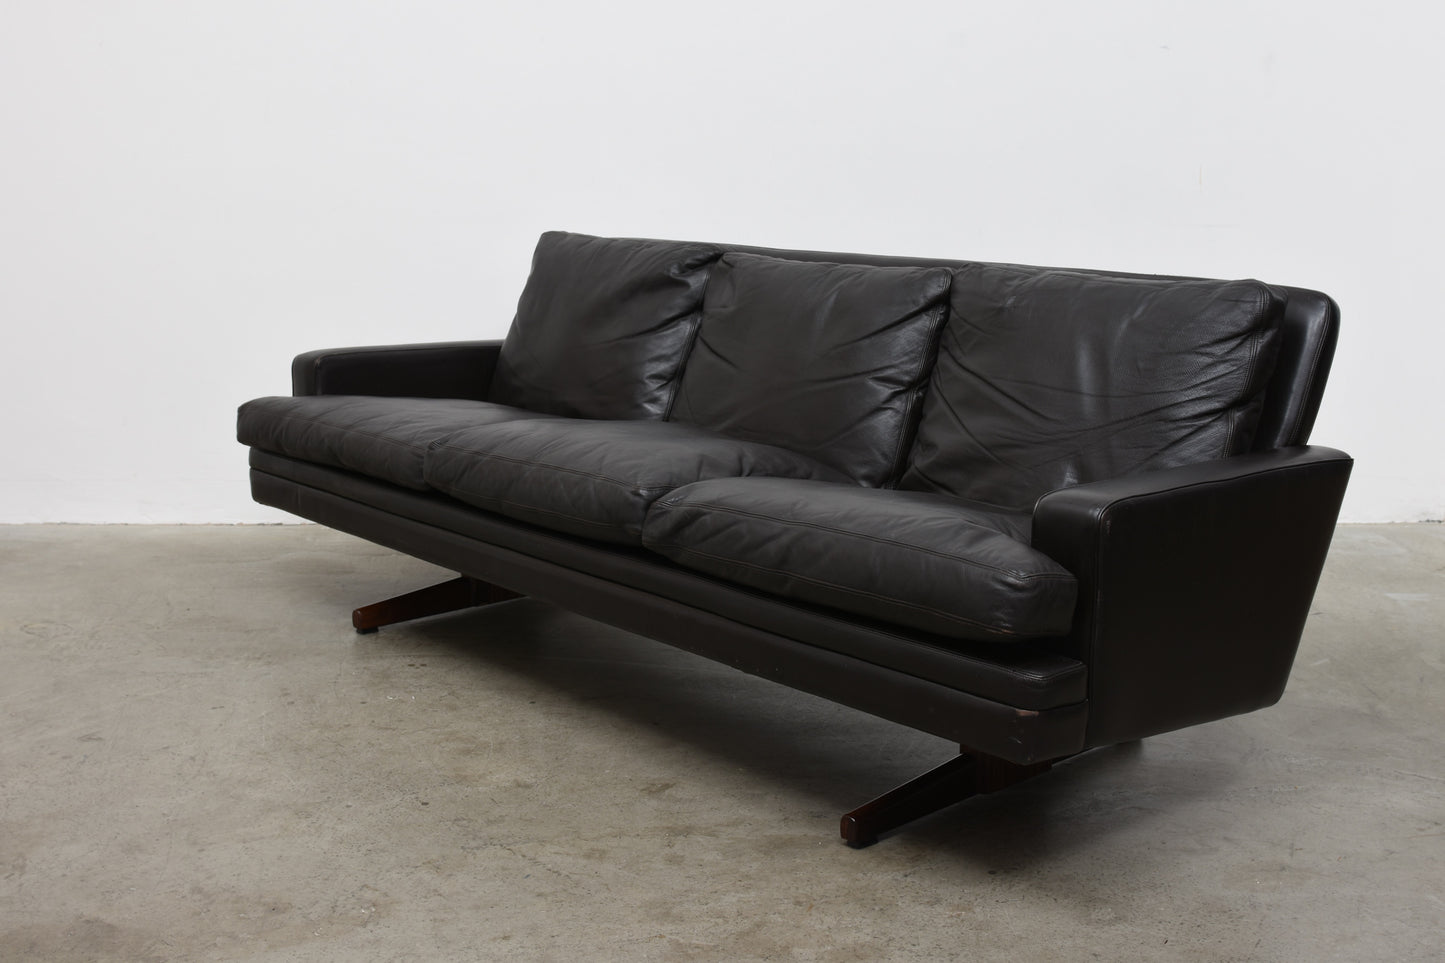 Model 807 sofa by Fredrik Kayser